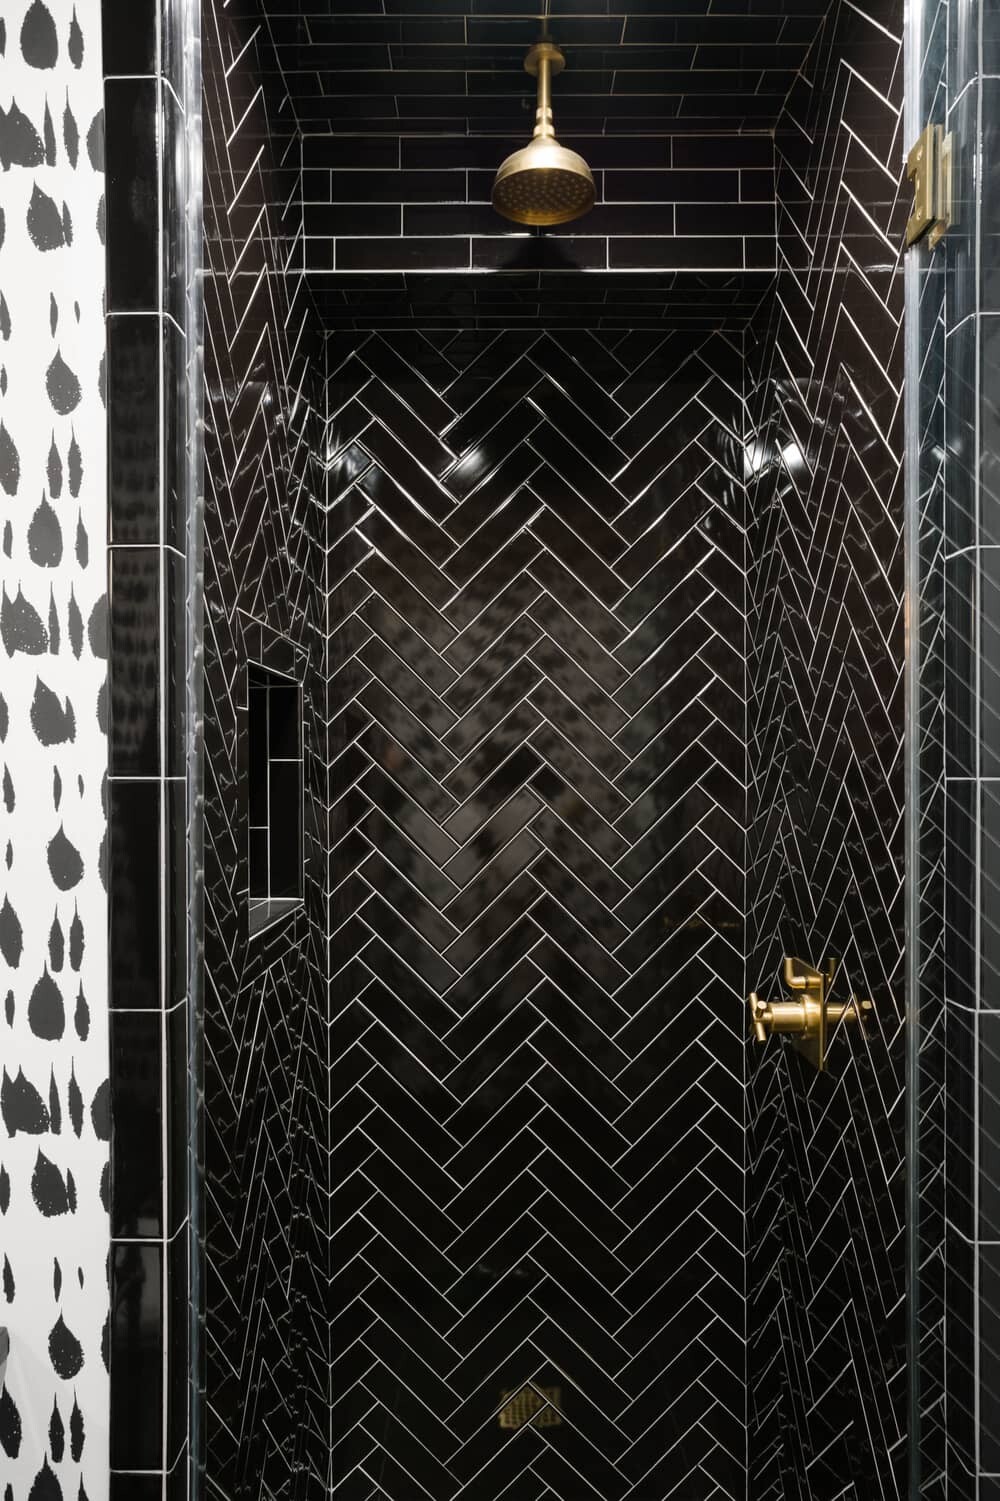 bathroom, Jane Kim Design